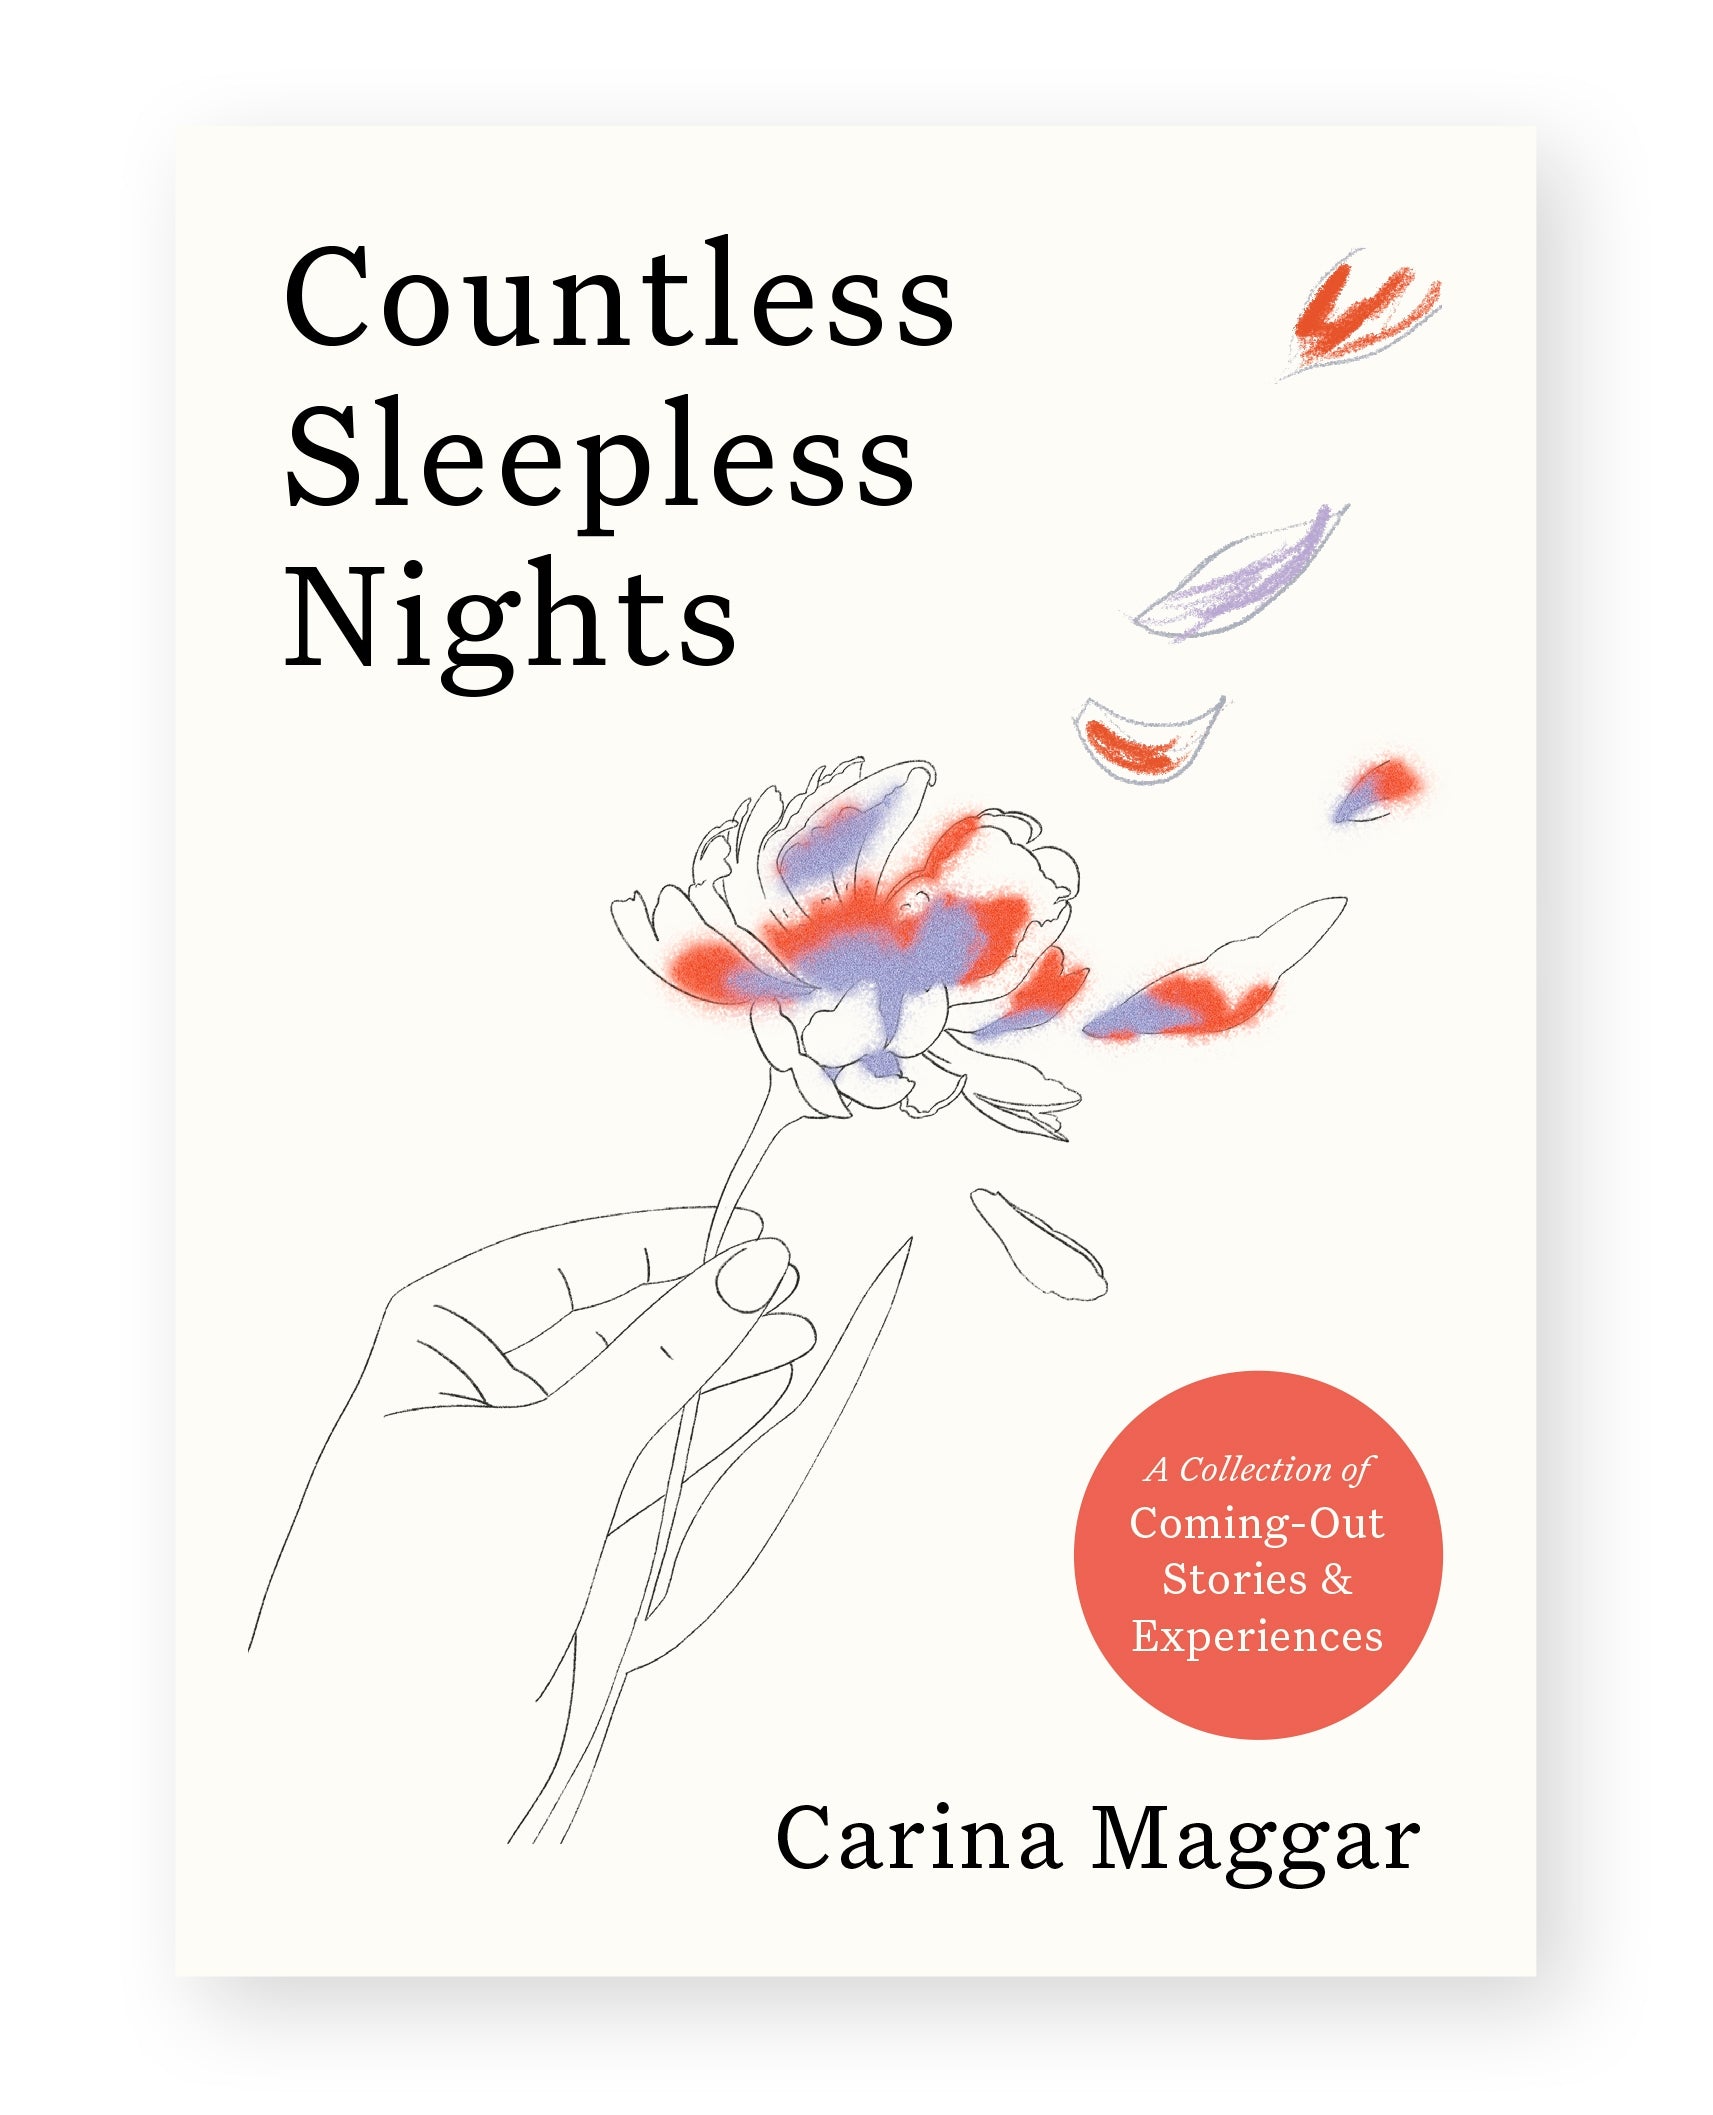 Countless Sleepless Nights by Carina Maggar